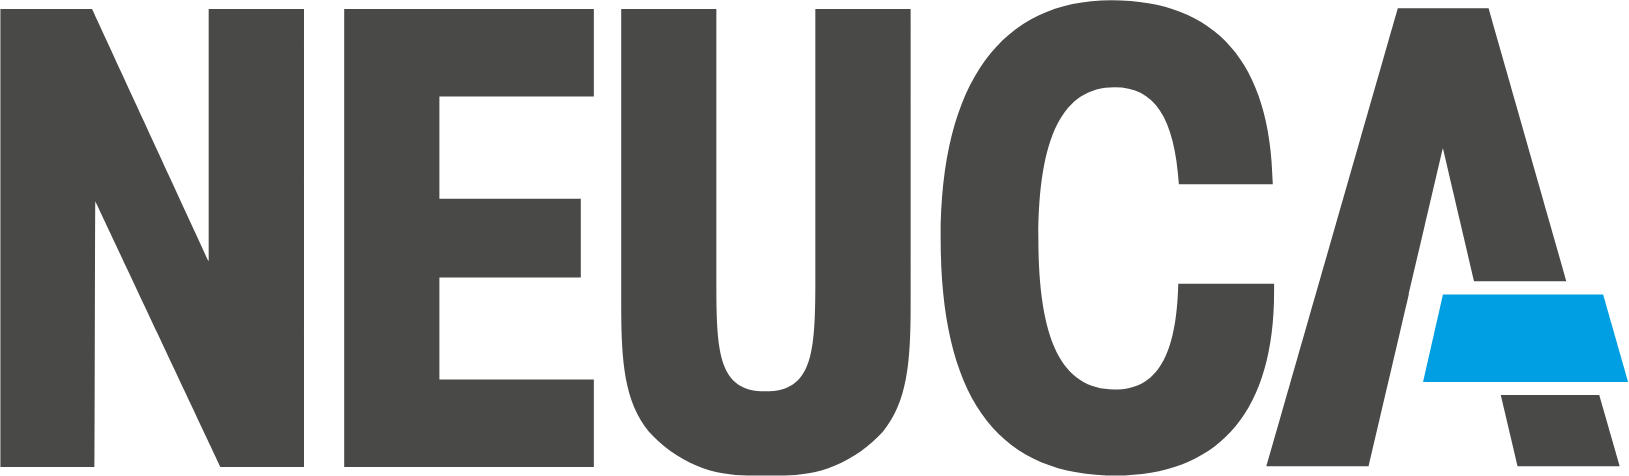 NEUCA logo large (transparent PNG)